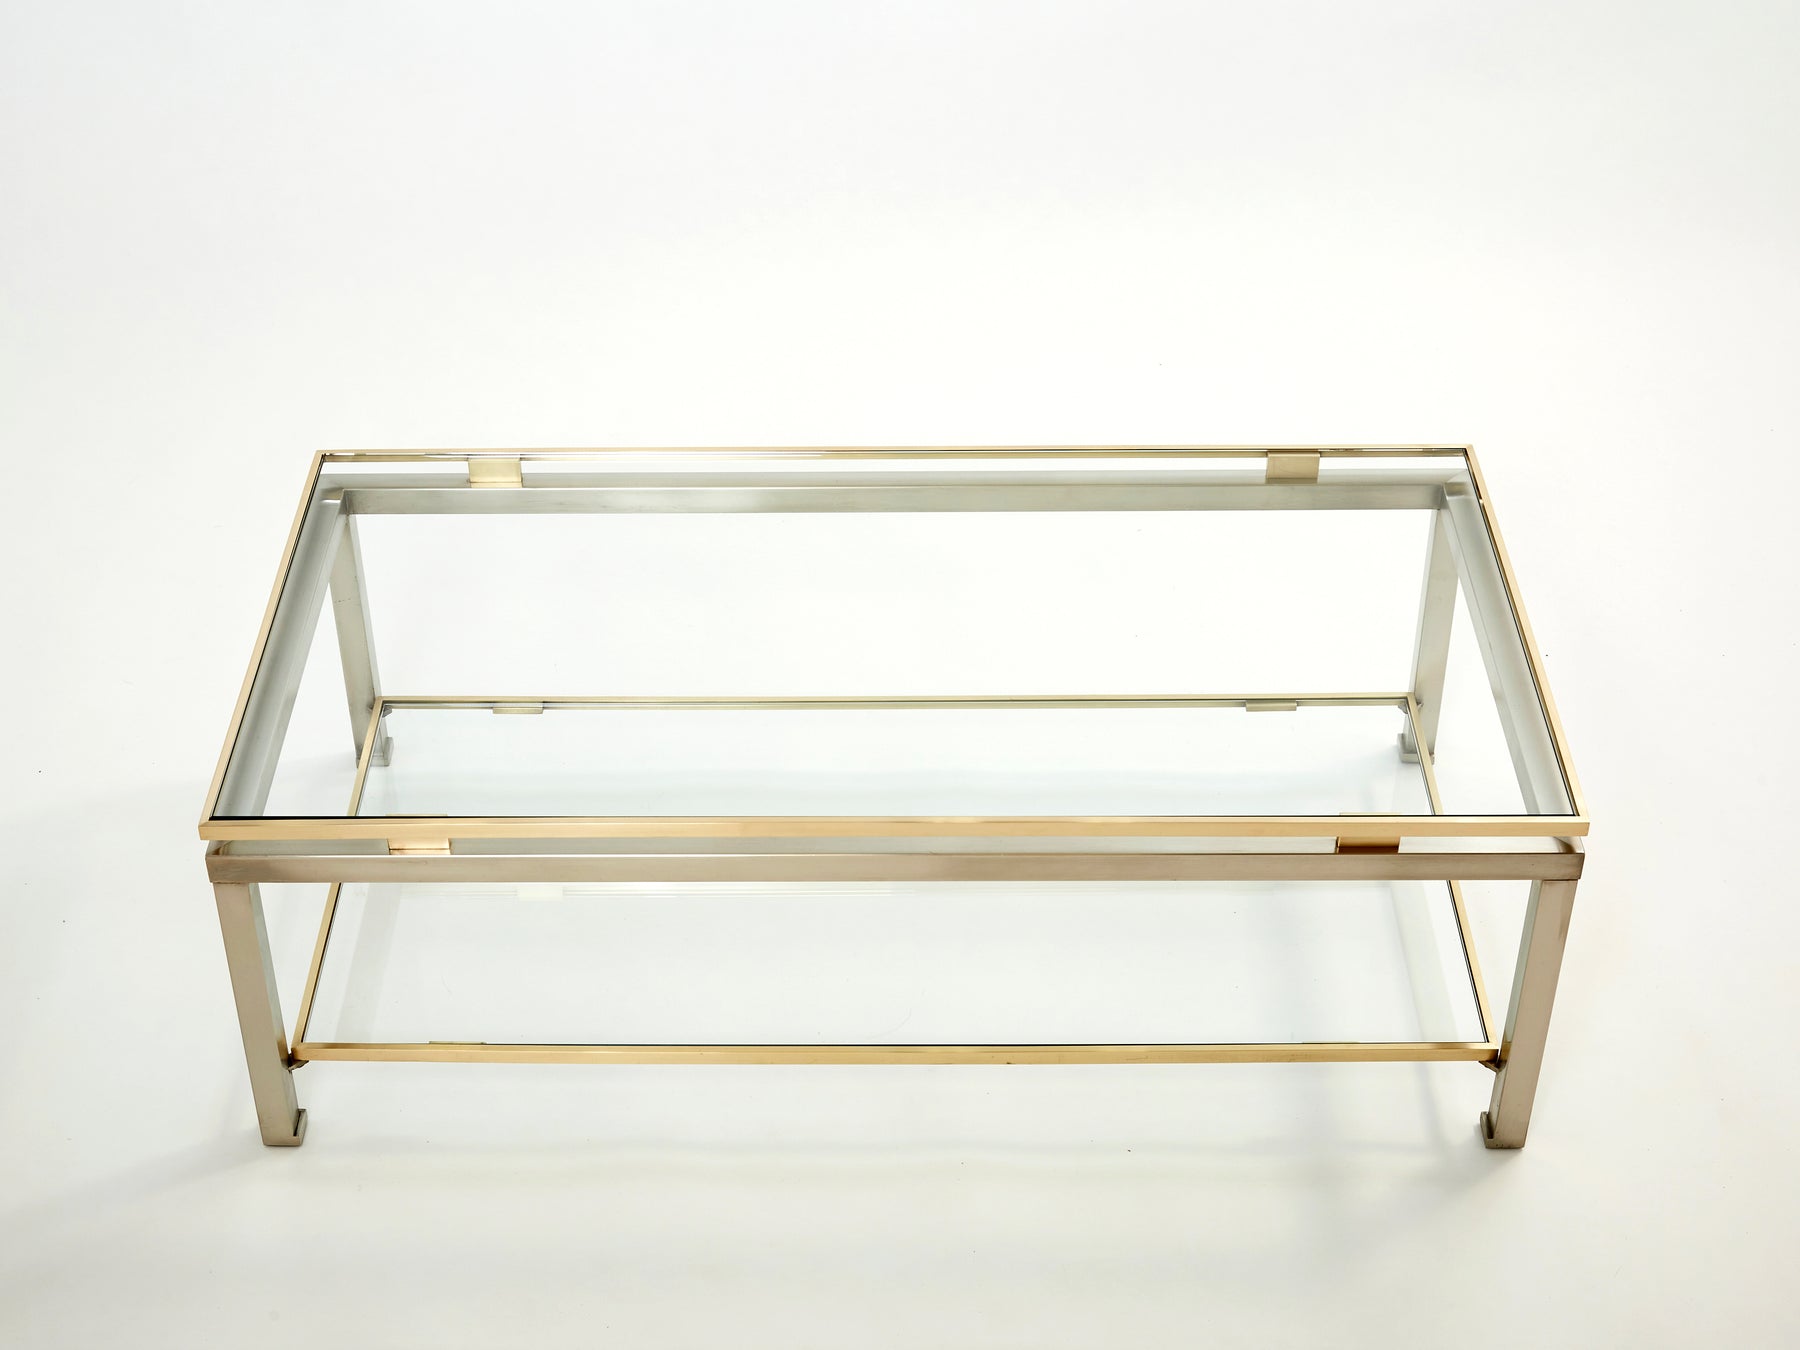 Brass steel two-tier coffee table by Guy Lefevre for Maison Jansen 1970s